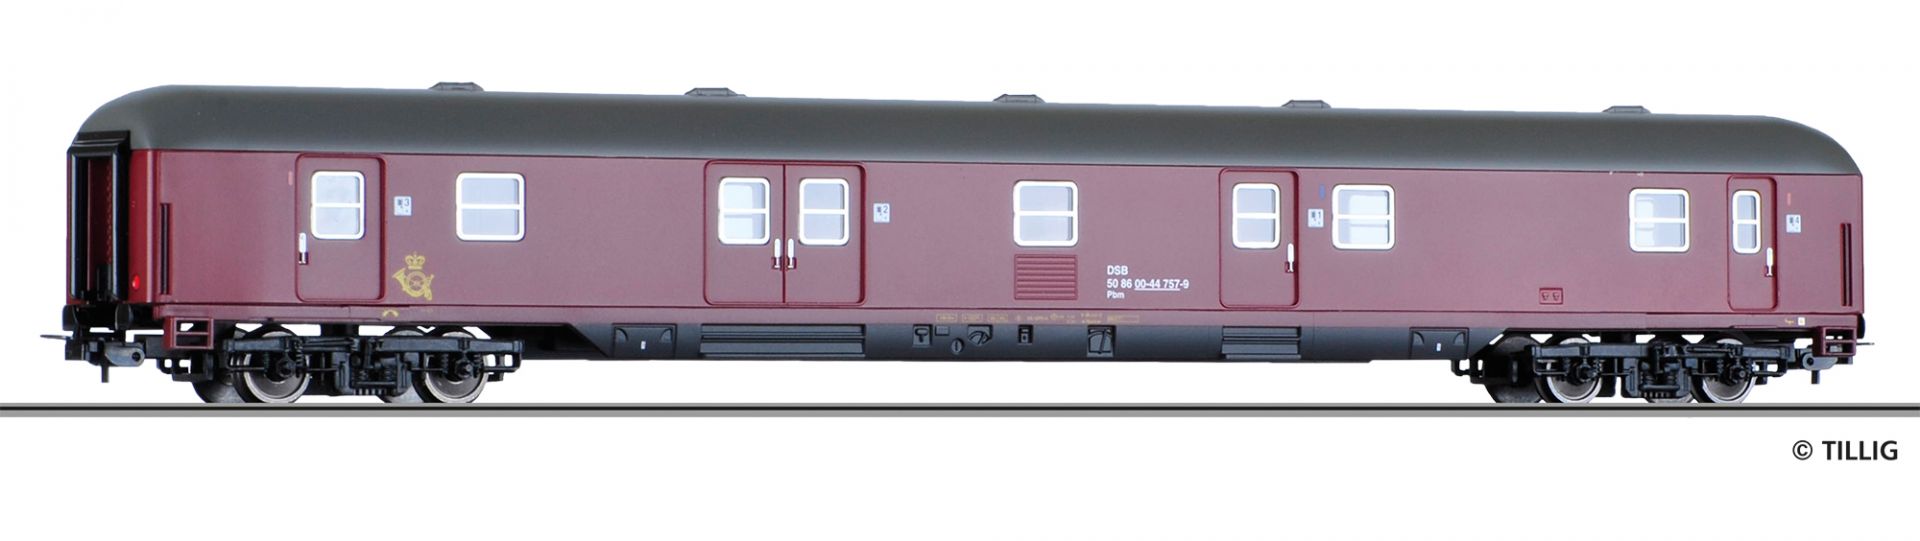 74933 | Bahnpostwagen Dänische Post -werksseitig ausverkauft-